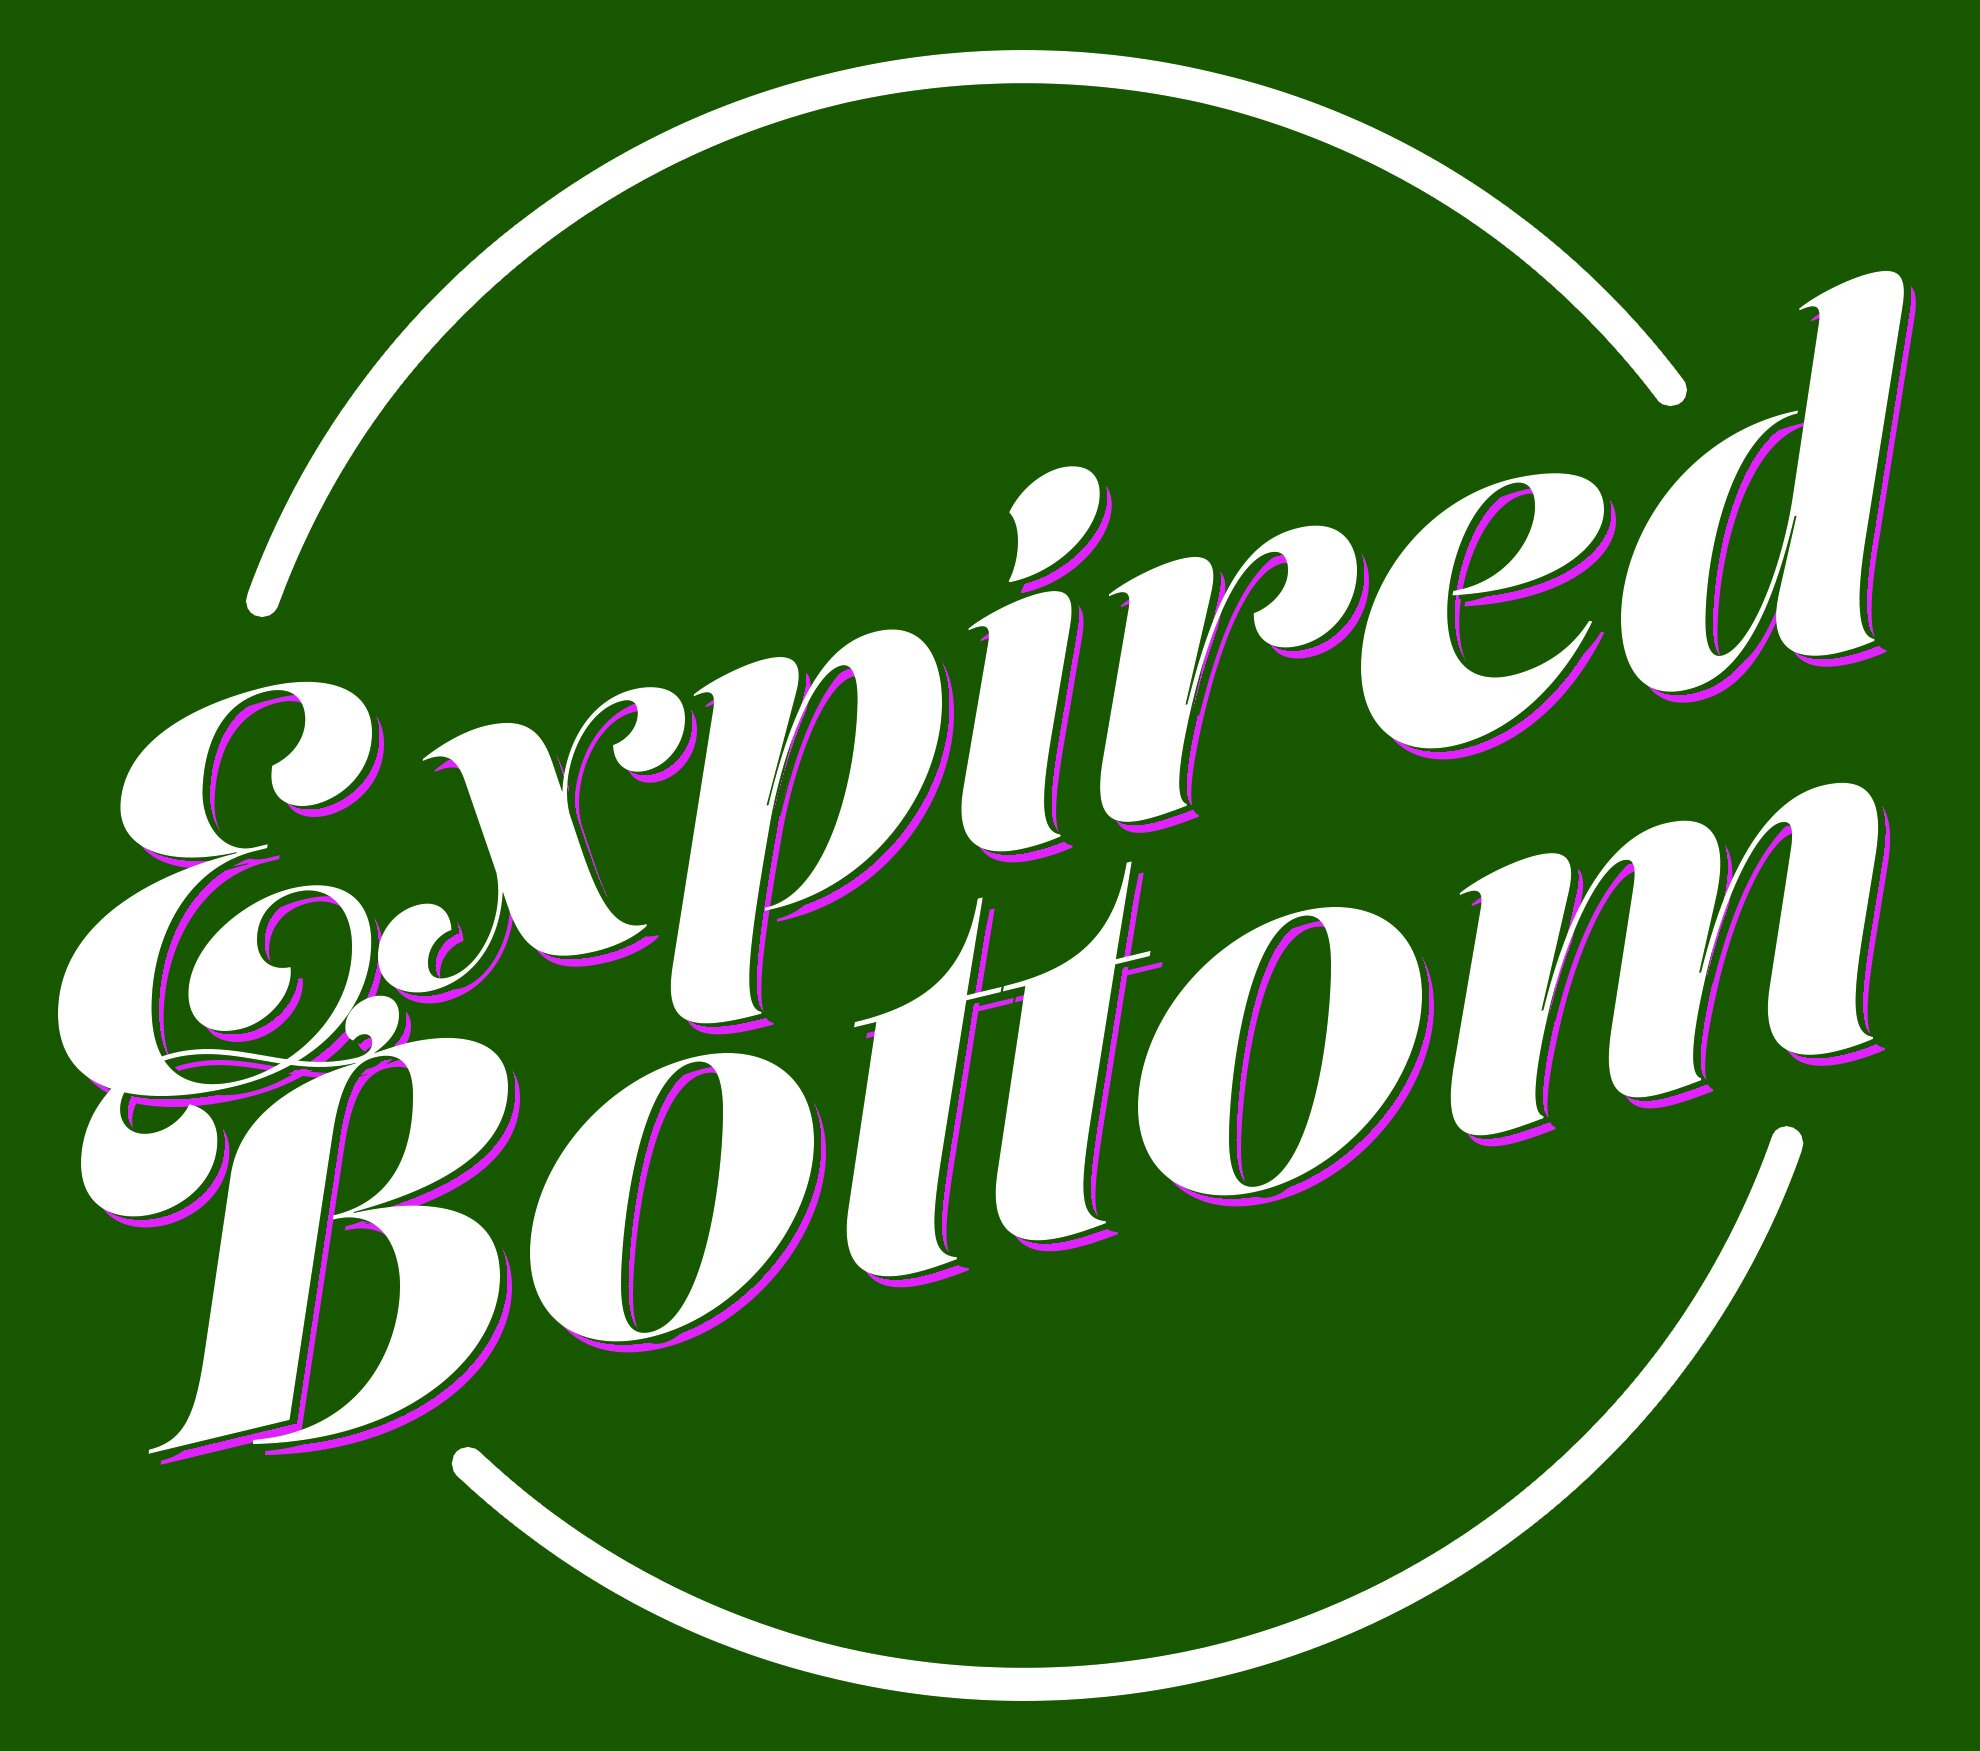 Expired Bottom